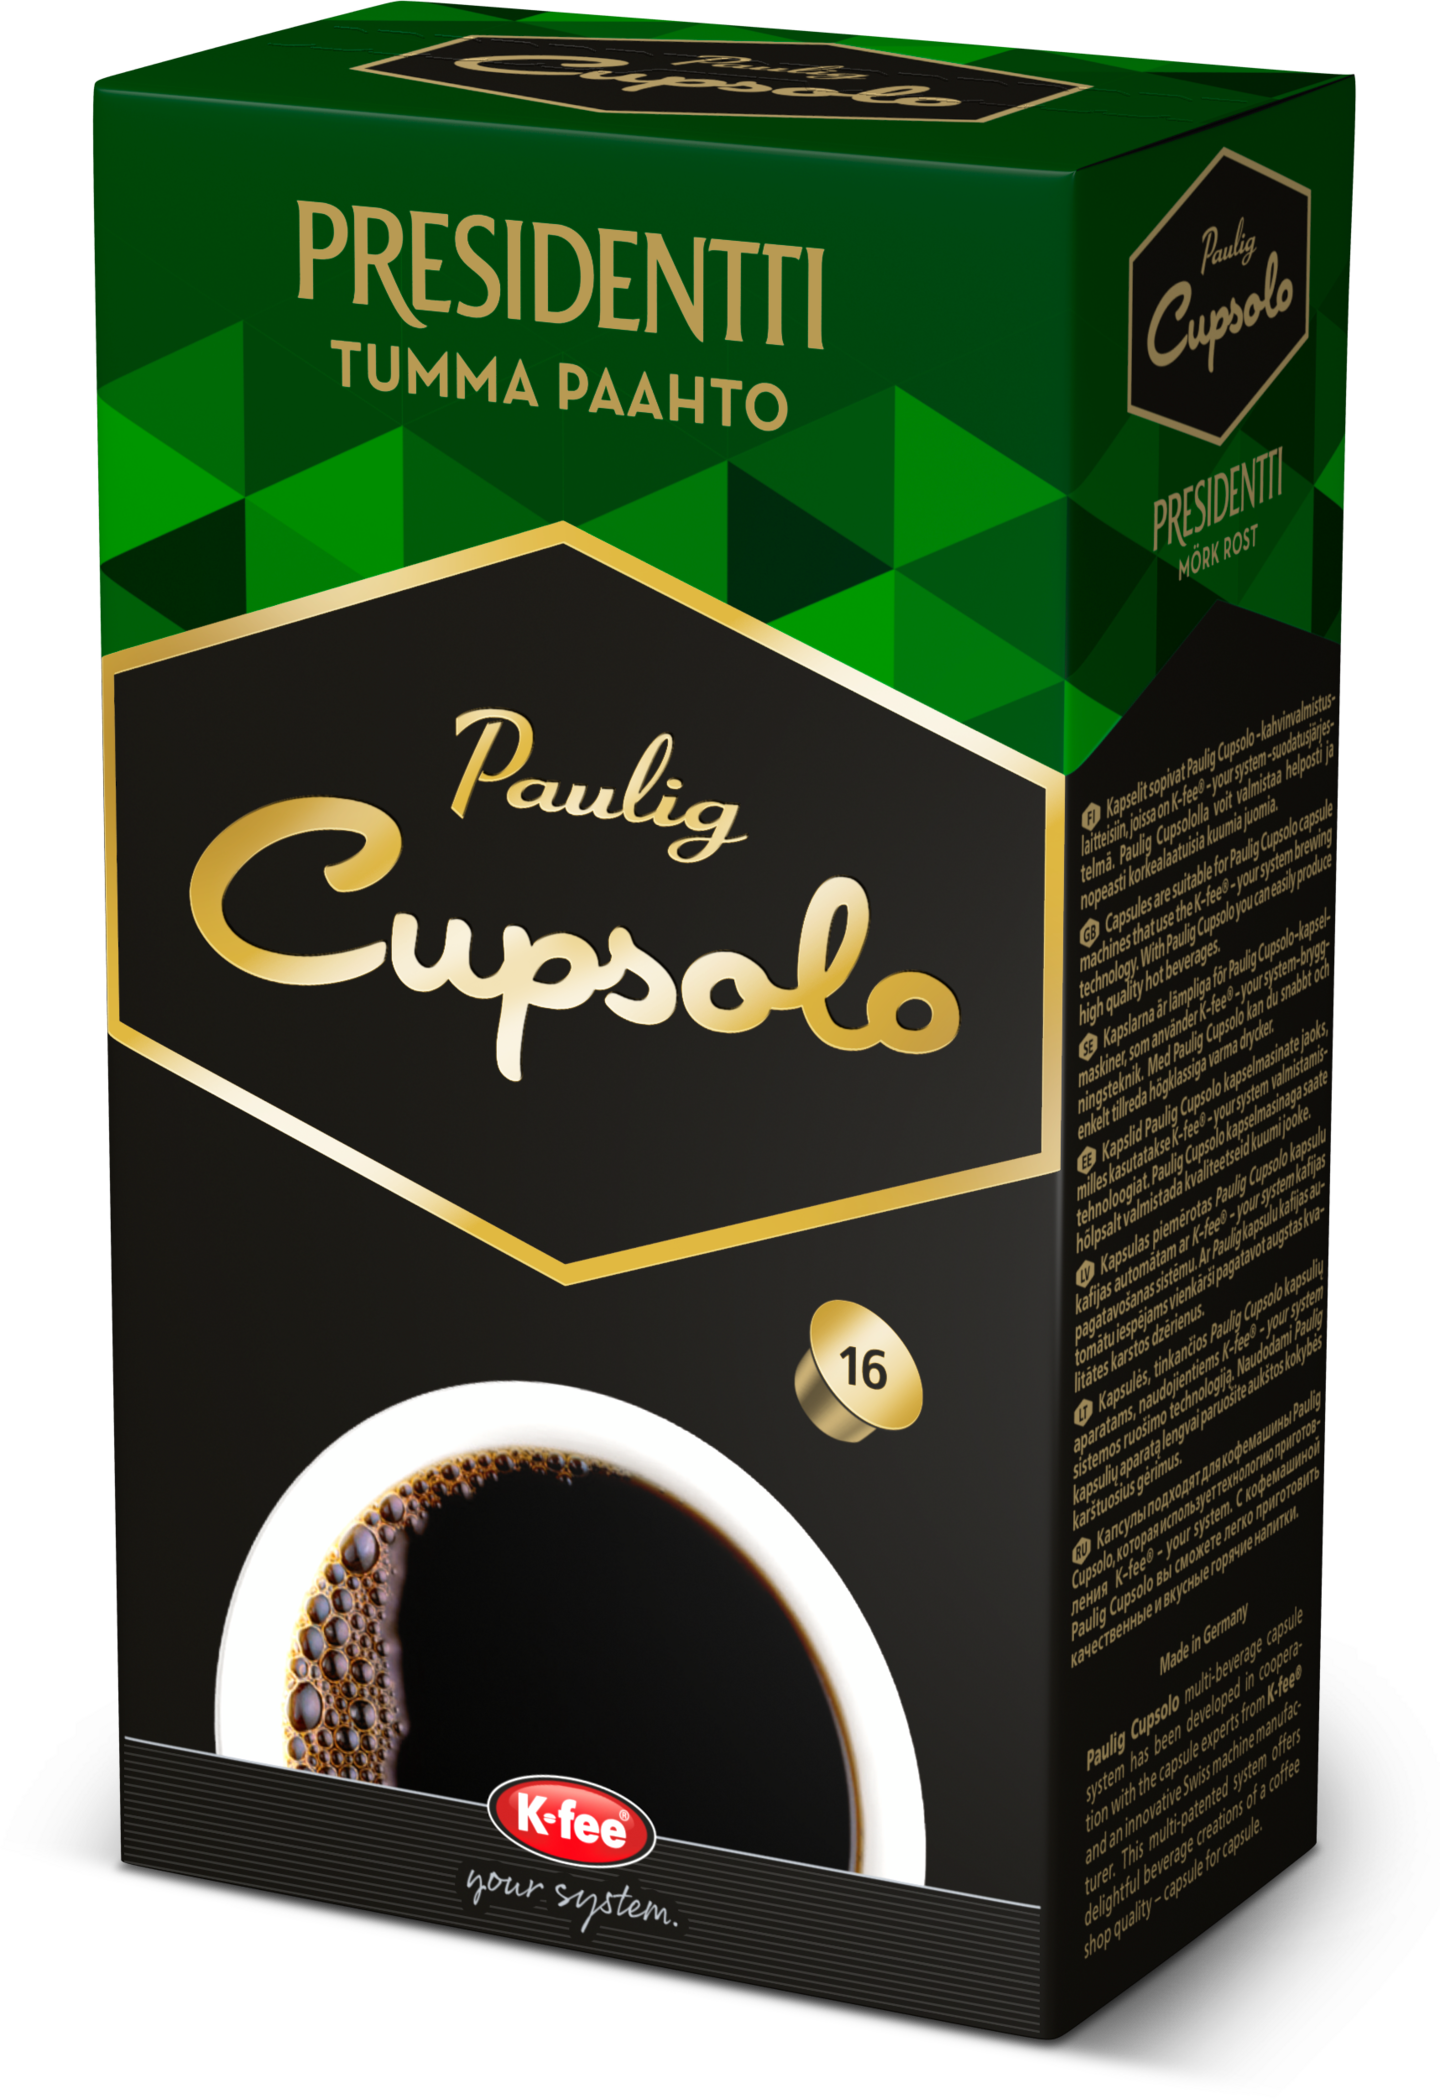 Paulig Cupsolo kahvi 16 kaps Presidentti Tumma Paahto 136g